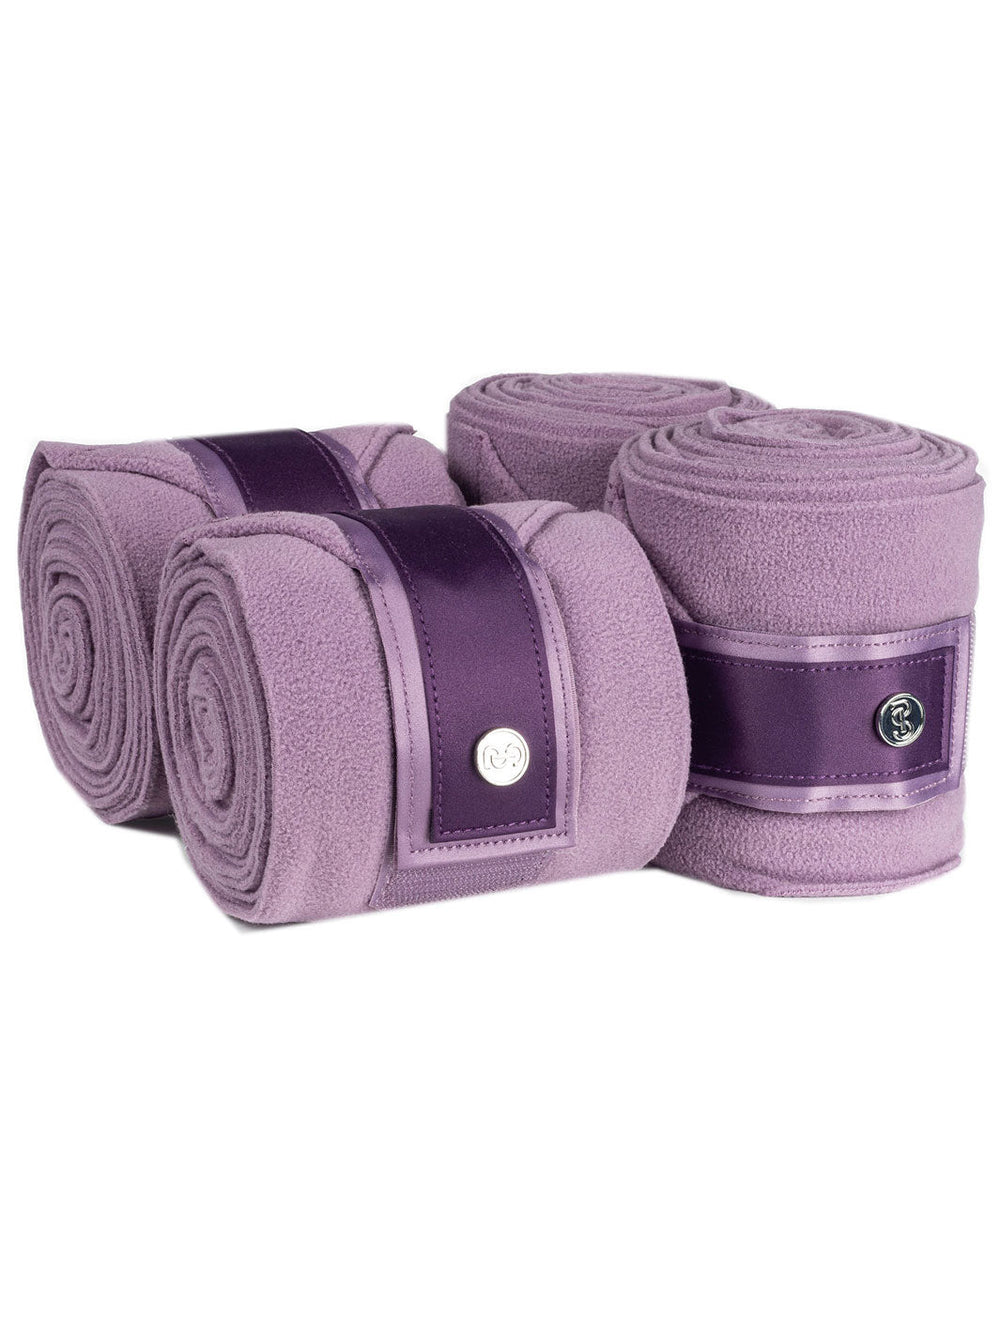 PSOS Dressage Saddle Pad and Bandage Set Signature Purple Grape